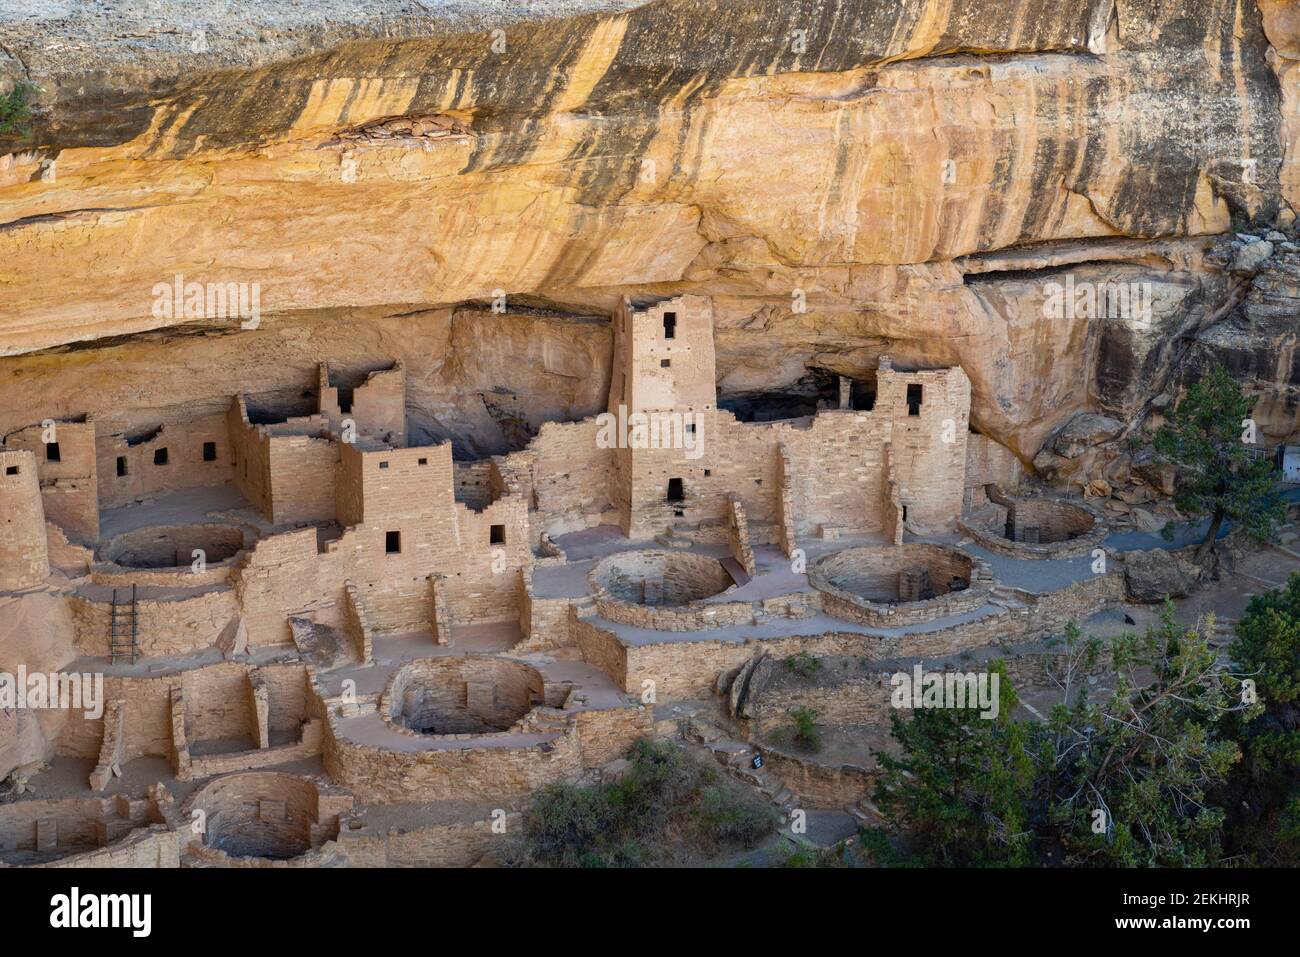 Cliff Palace. Image from Mesa Verde National Park near Durango, Colorado, showing ancient Anasazi dwellings. Stock Photo